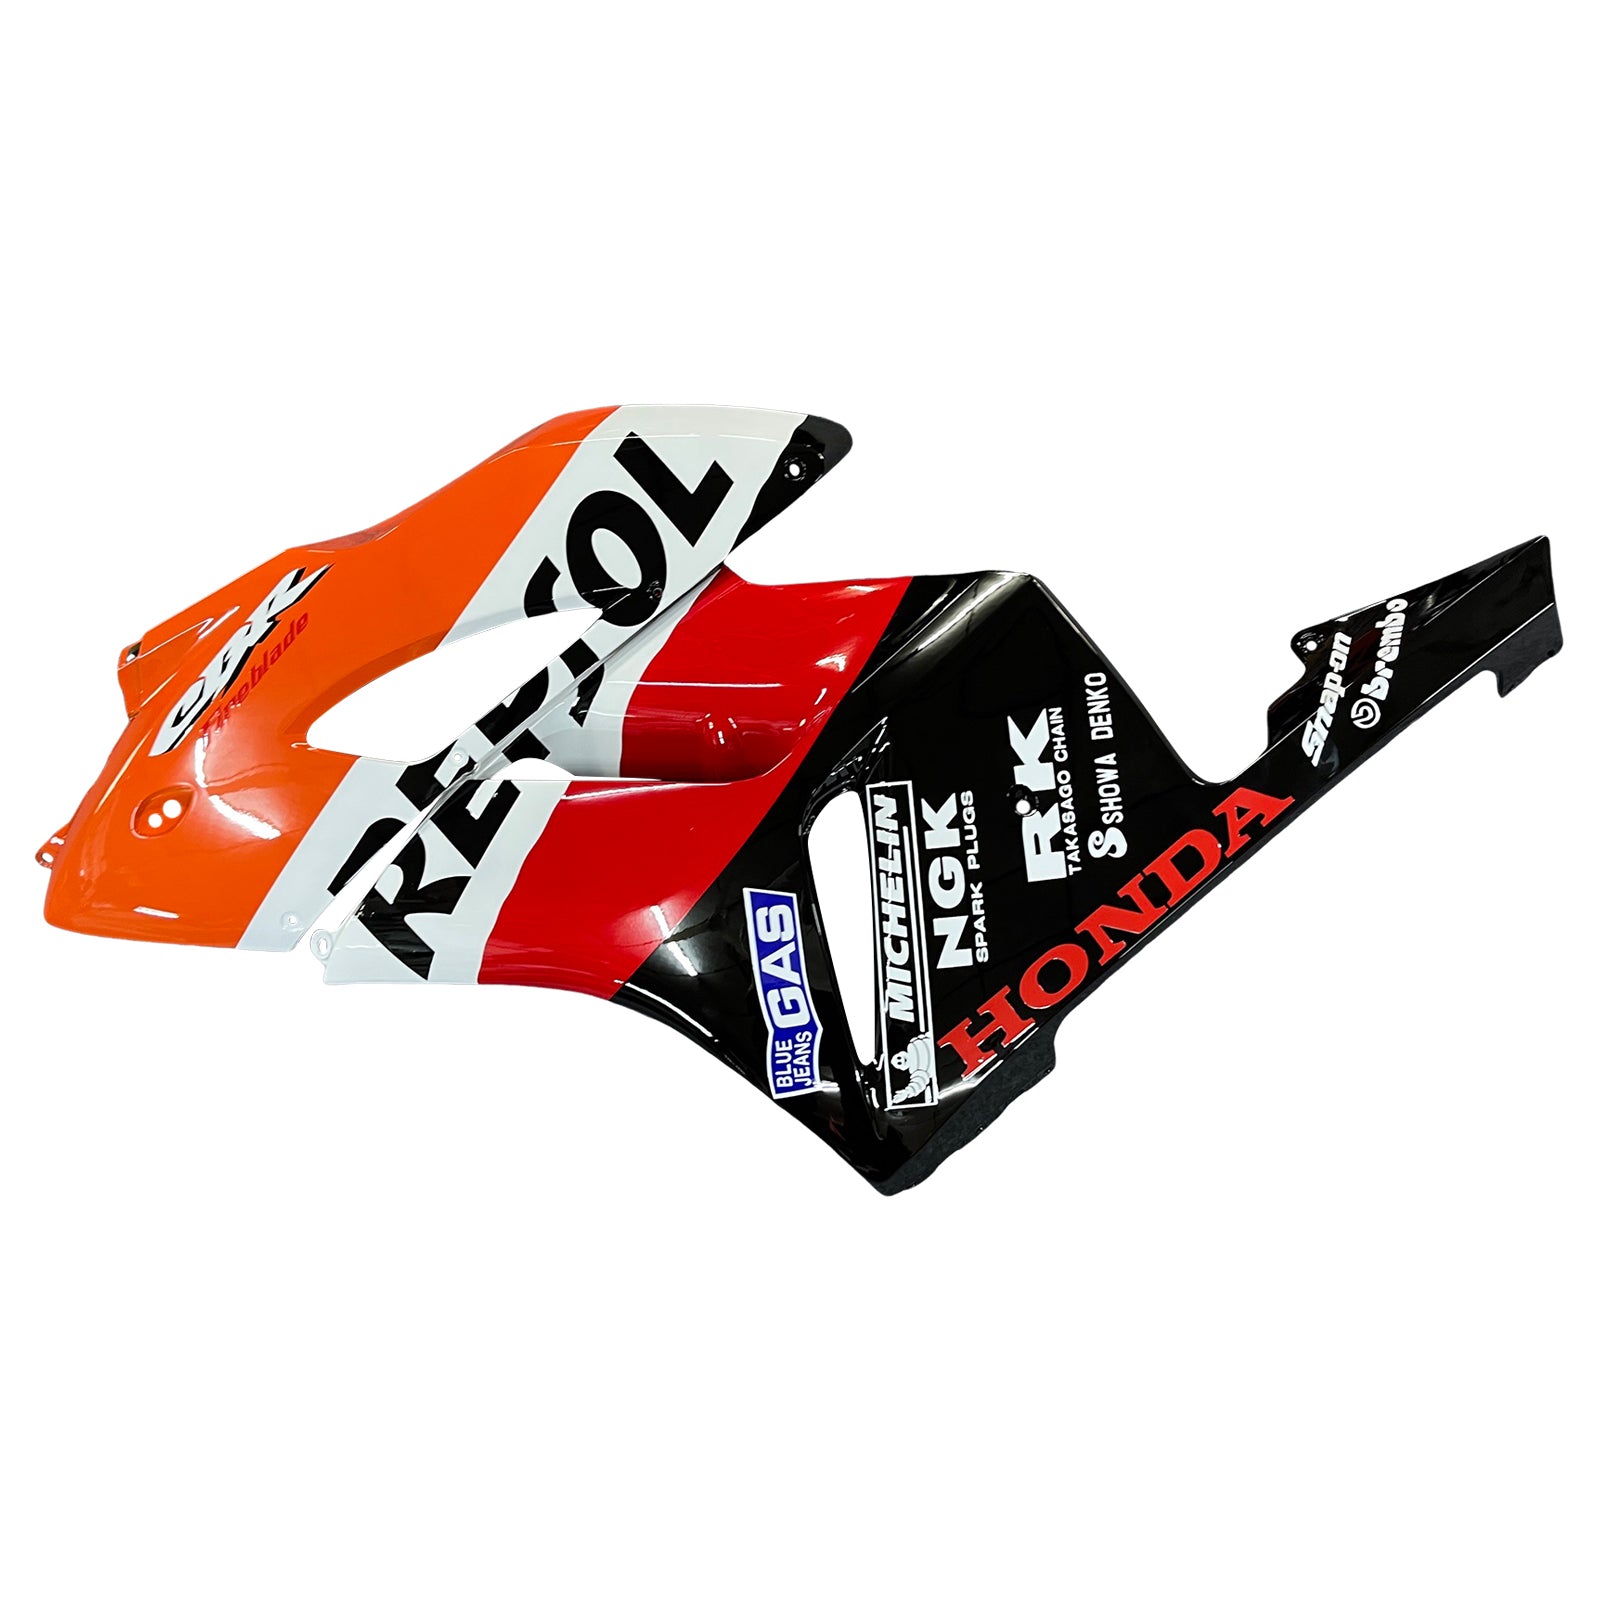 Amotopart Carene Honda CBR1000RR 2004-2005 Carena Repsol Racing Kit carena nero arancione